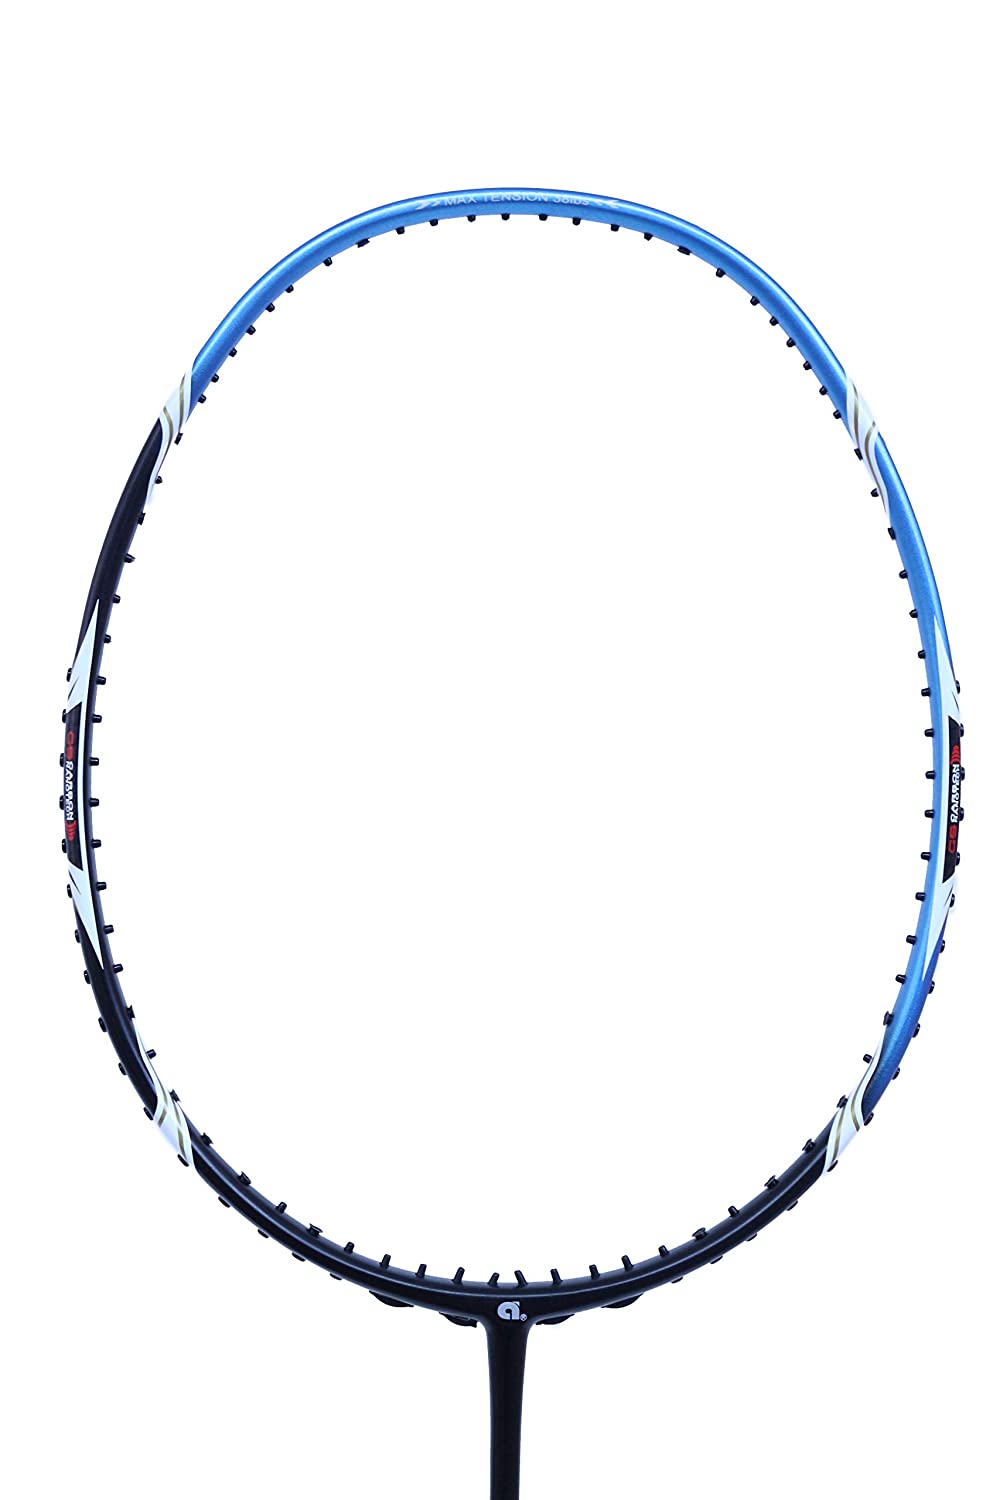 Apacs Edge S9 Badminton Racquet - Unstrung